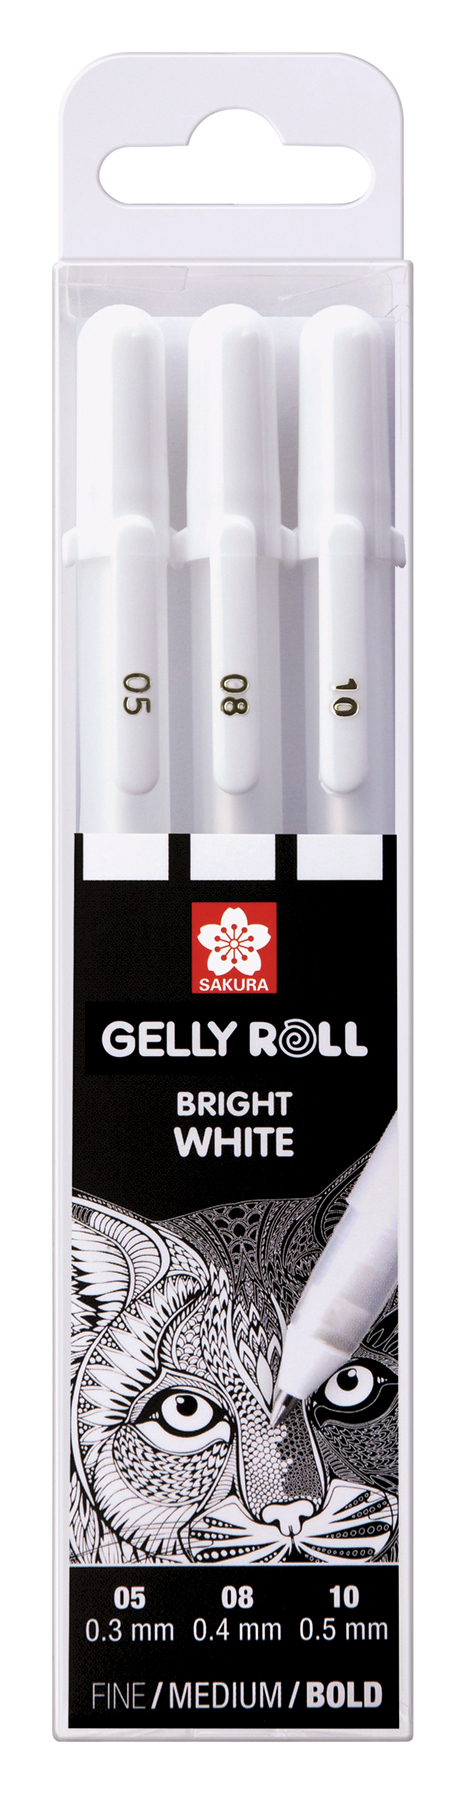 Stylo gel Gelly Roll blanc Sakura 05